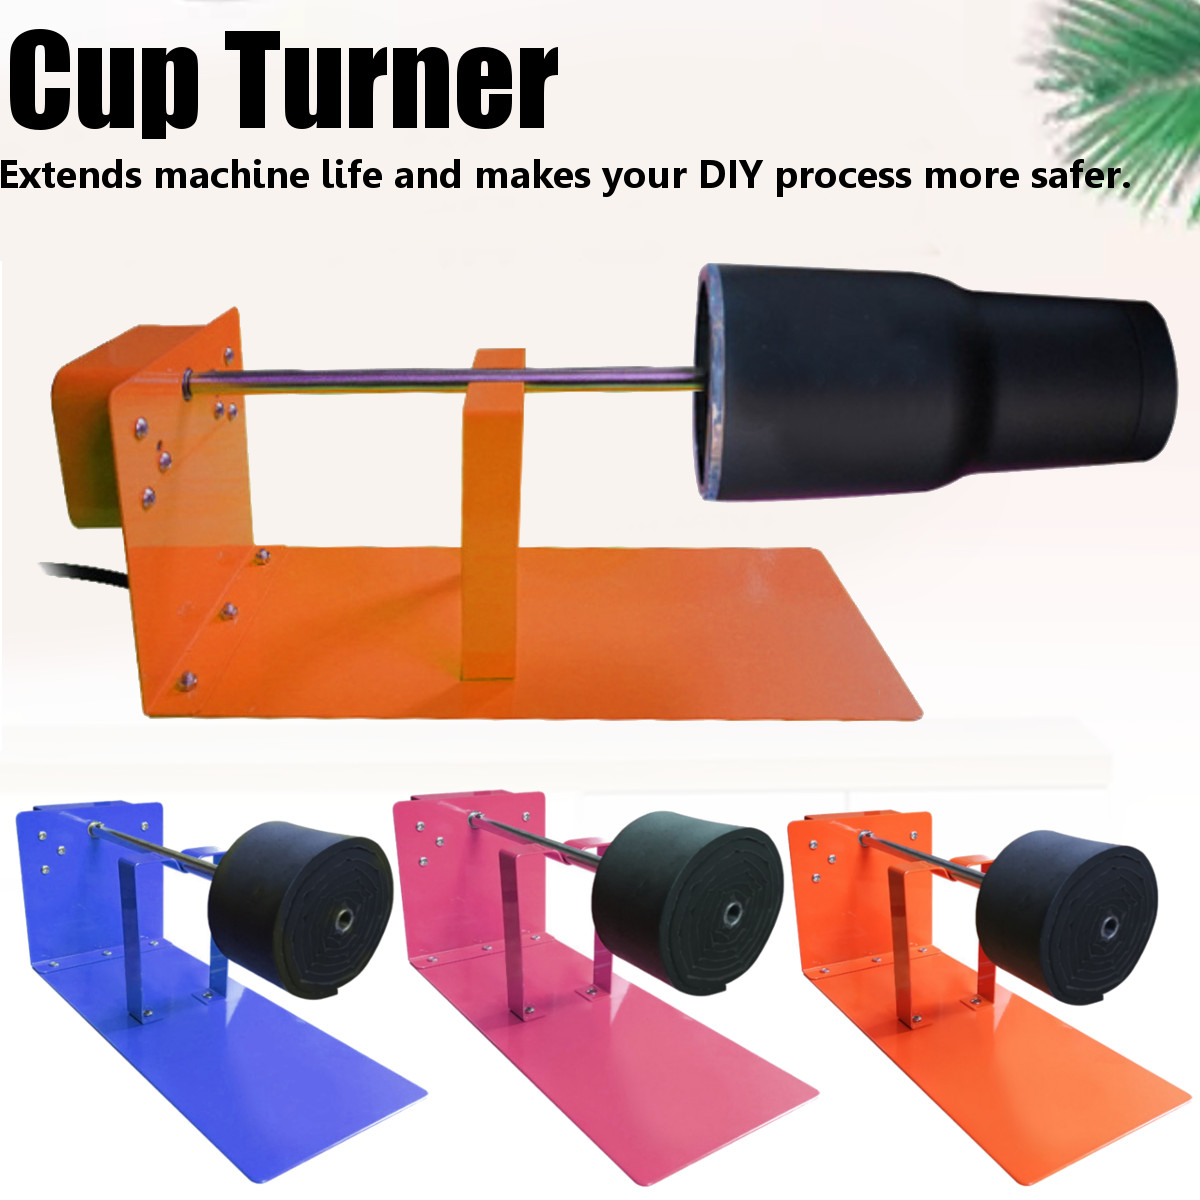 5RPM-110V-Single-Cup-Turner-Spinner-Tumbler-Cuptisserie-Epoxy-Spinner-Glitter-Tumbler-for-Crafts-Tum-1595944-3